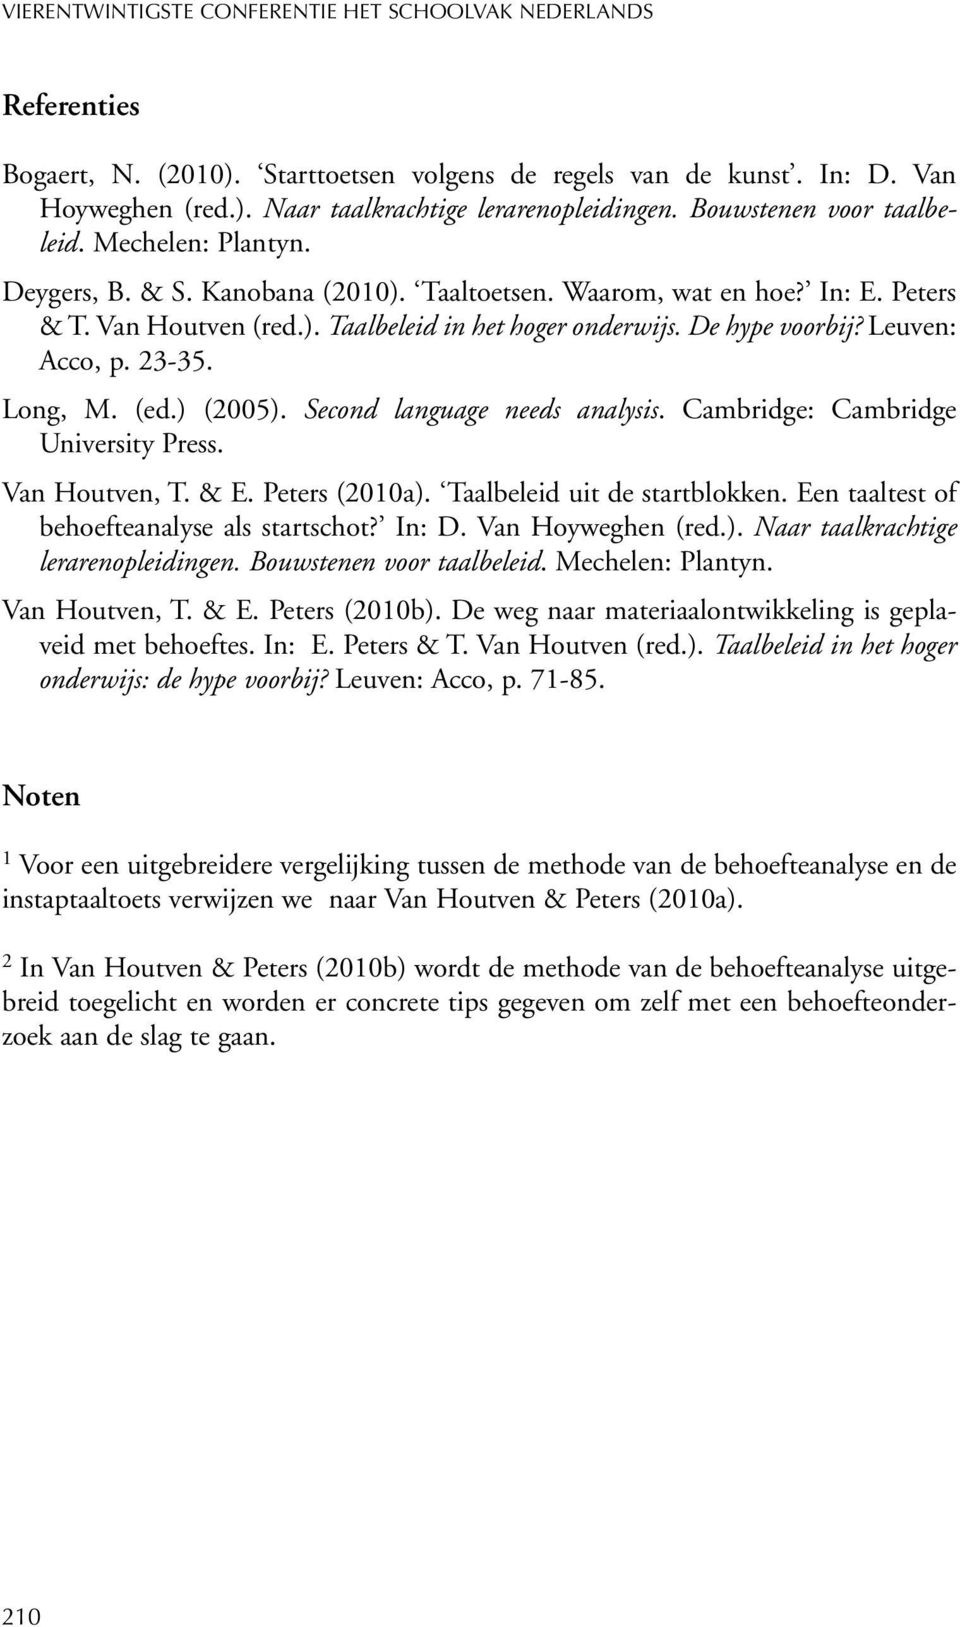 De hype voorbij? Leuven: Acco, p. 23-35. Long, M. (ed.) (2005). Second language needs analysis. Cambridge: Cambridge University Press. Van Houtven, T. & E. Peters (2010a).